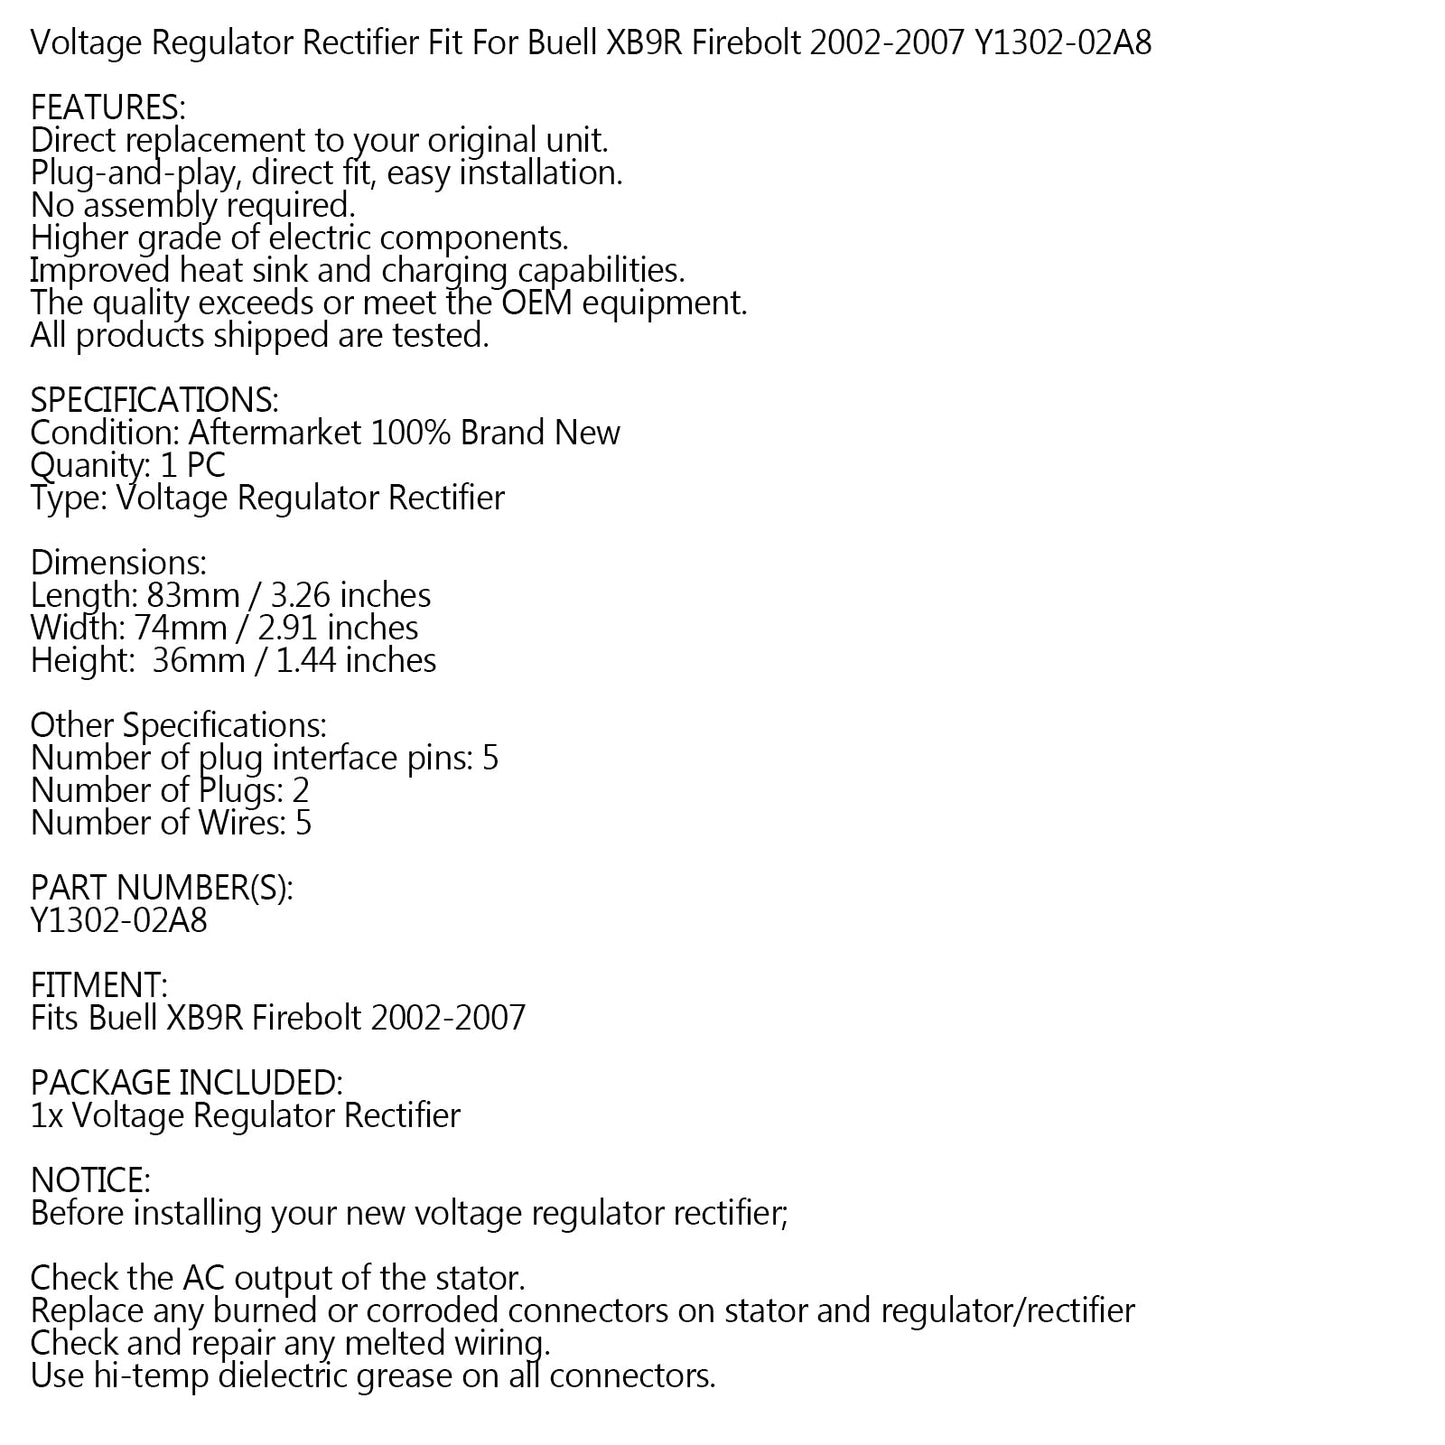 Voltage Regulator Rectifier for Buell XB9R Firebolt 2002-2007 #Y1302-02A8